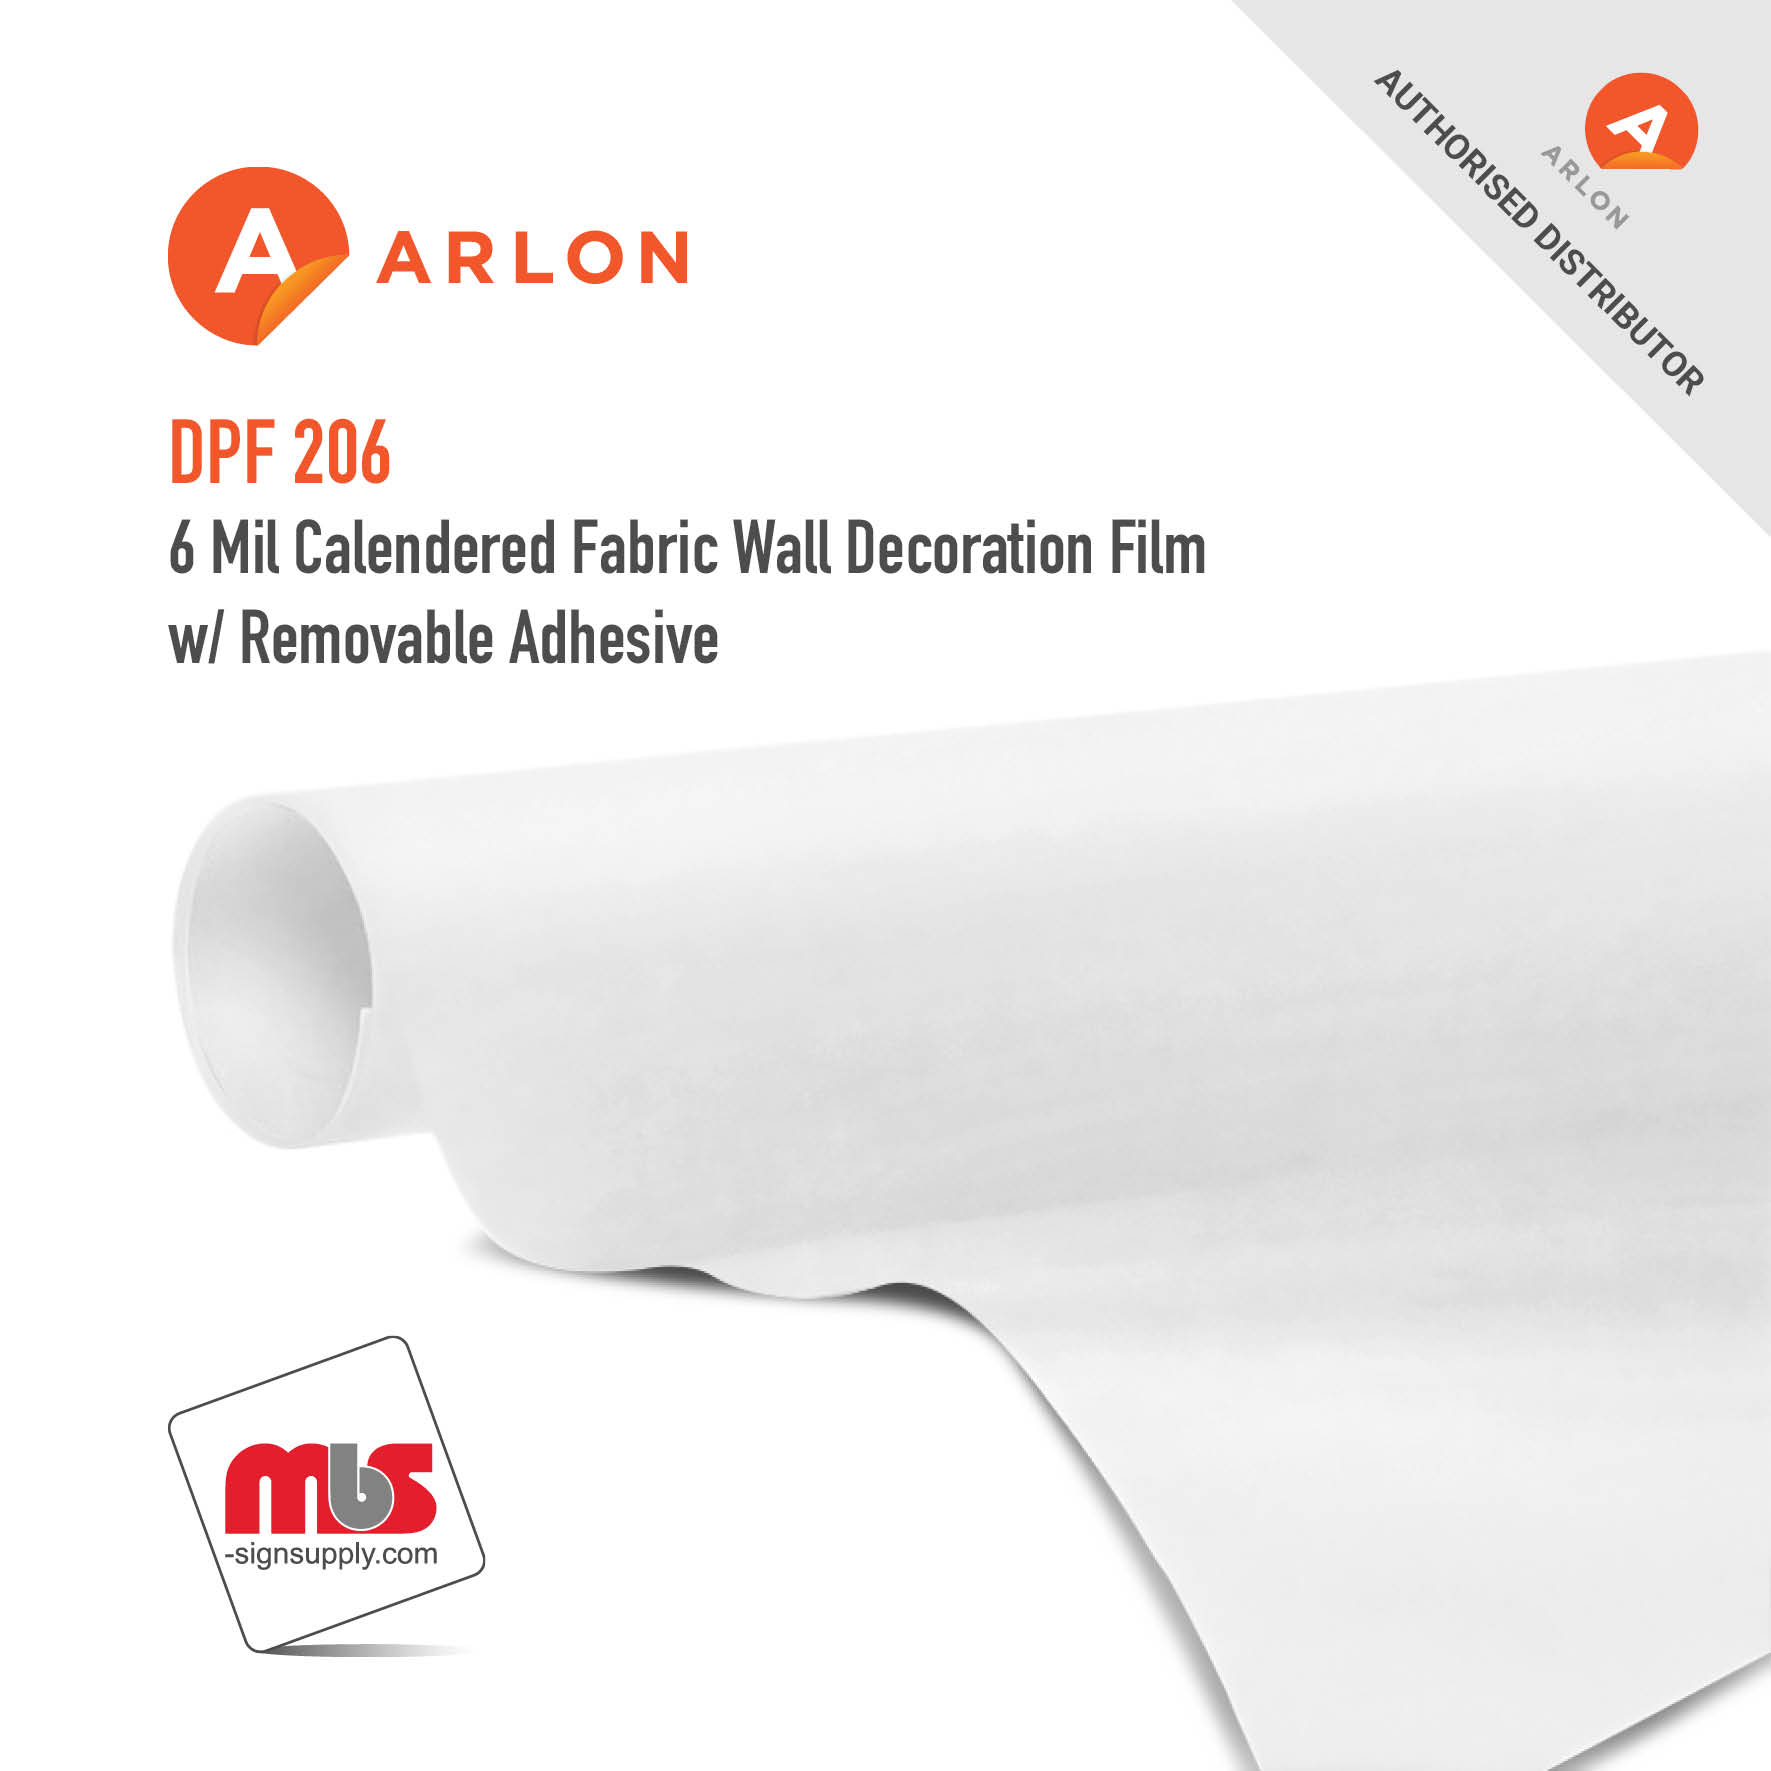 54'' x 33 Yard Roll - Arlon DPF 206 6 Mil Calendered Fabric Wall Decoration Film w/ Removable Adhesive